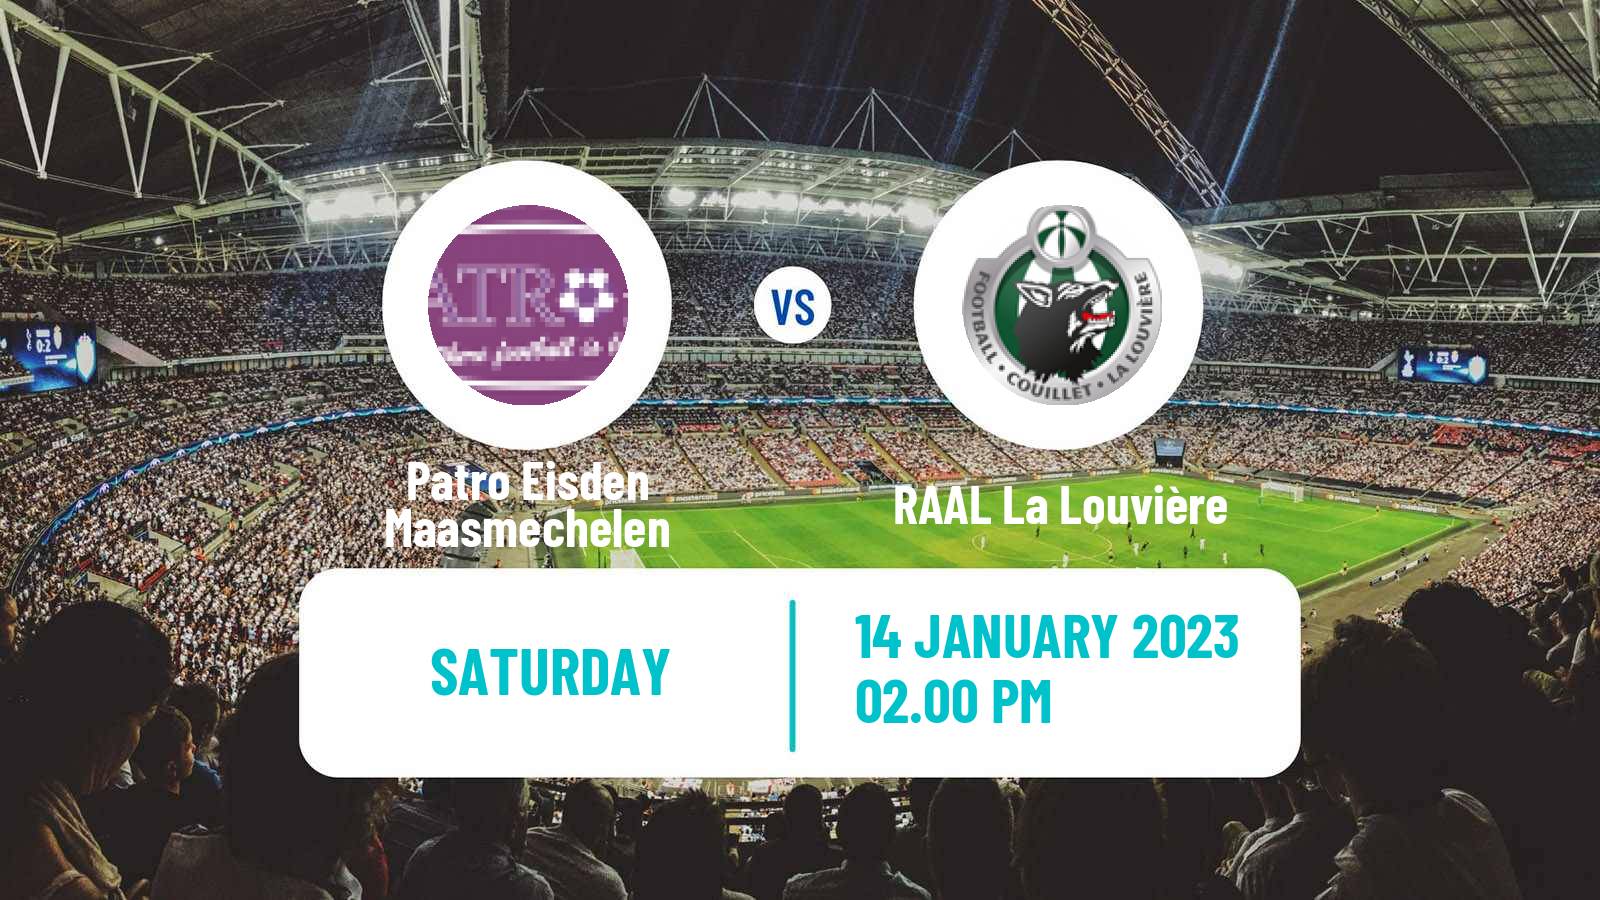 Soccer Belgian National Division 1 Patro Eisden Maasmechelen - RAAL La Louvière